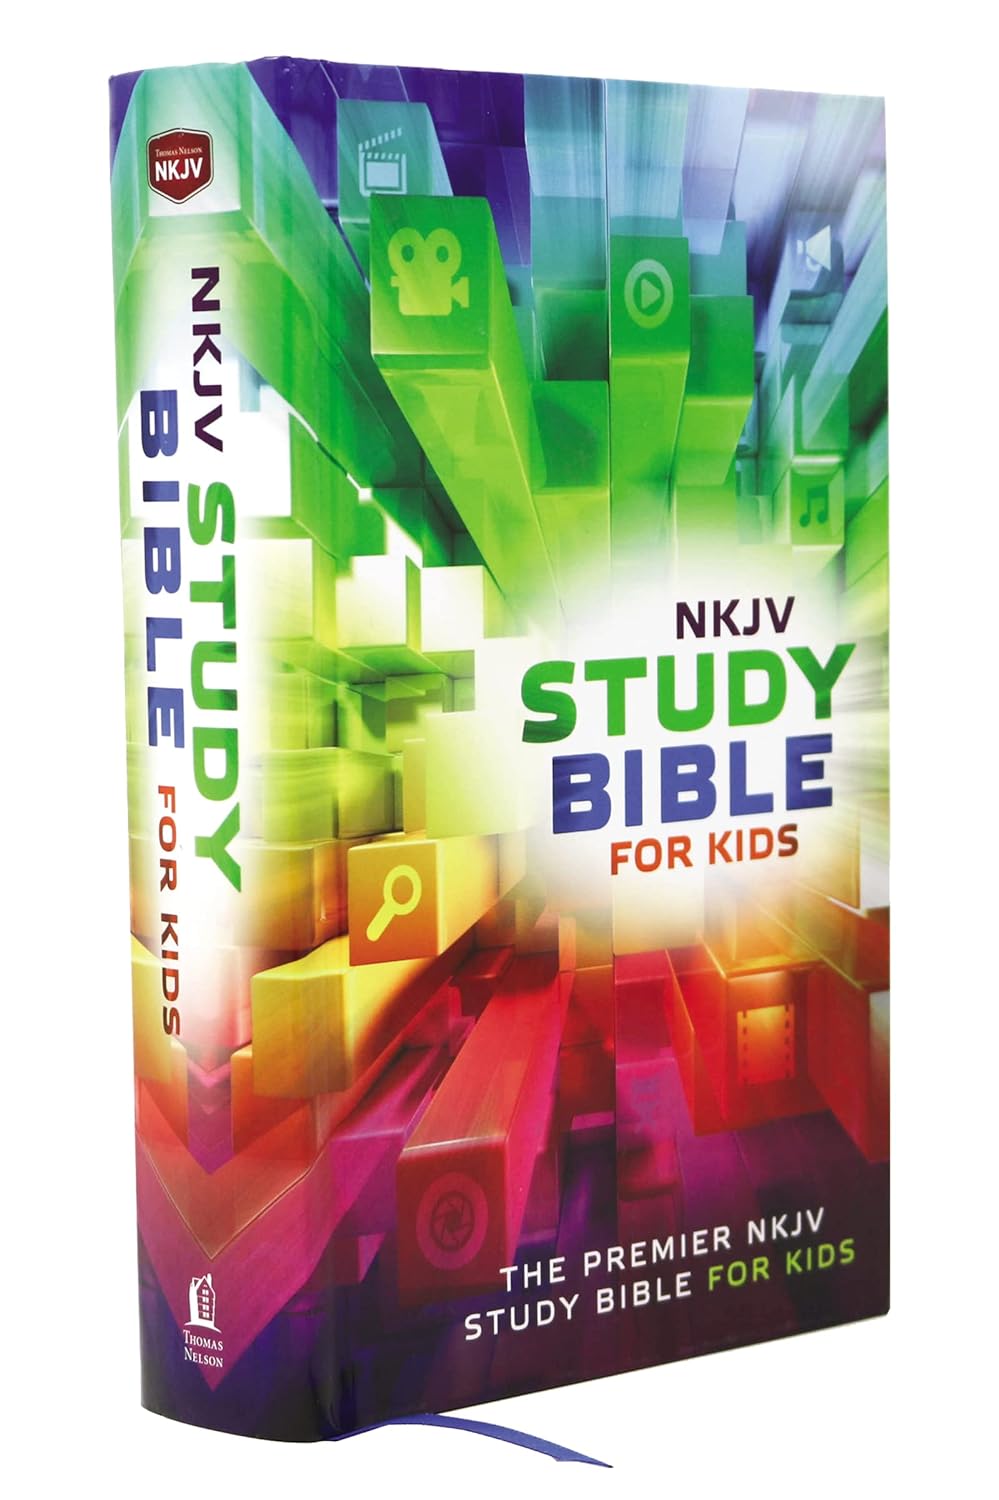 NKJV Study Bible for kids